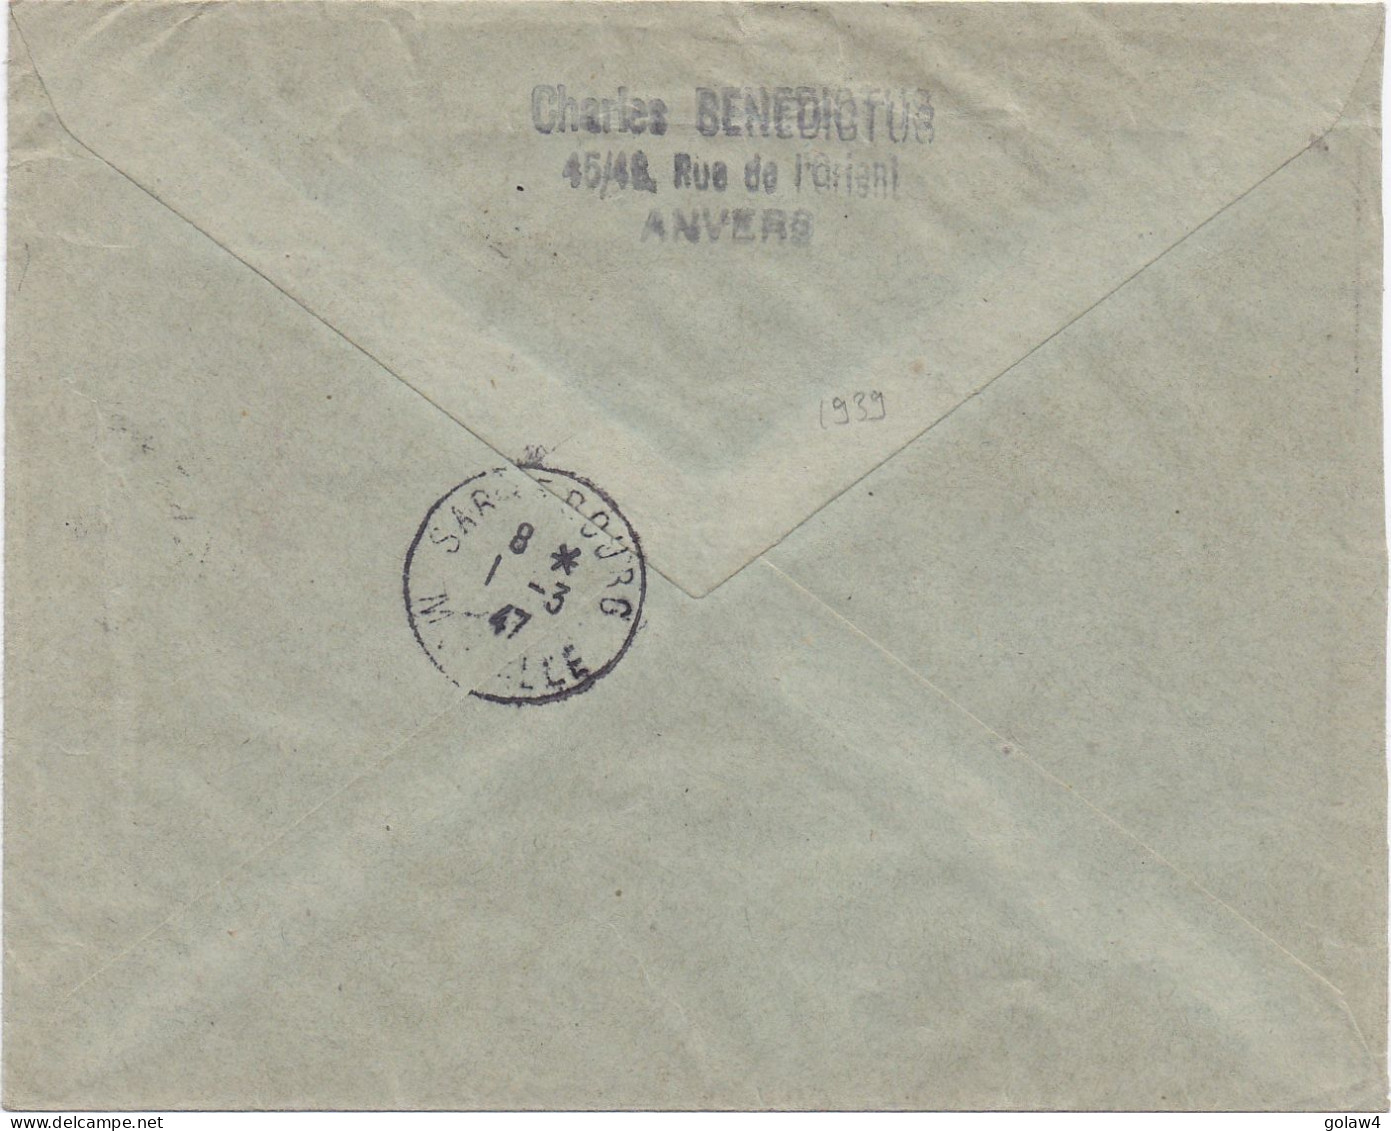 36137# POSTE AERIENNE LETTRE RECOMMANDEE PAR AVION Obl ANTWERPEN 1947 SARREBOURG MOSELLE - Brieven En Documenten